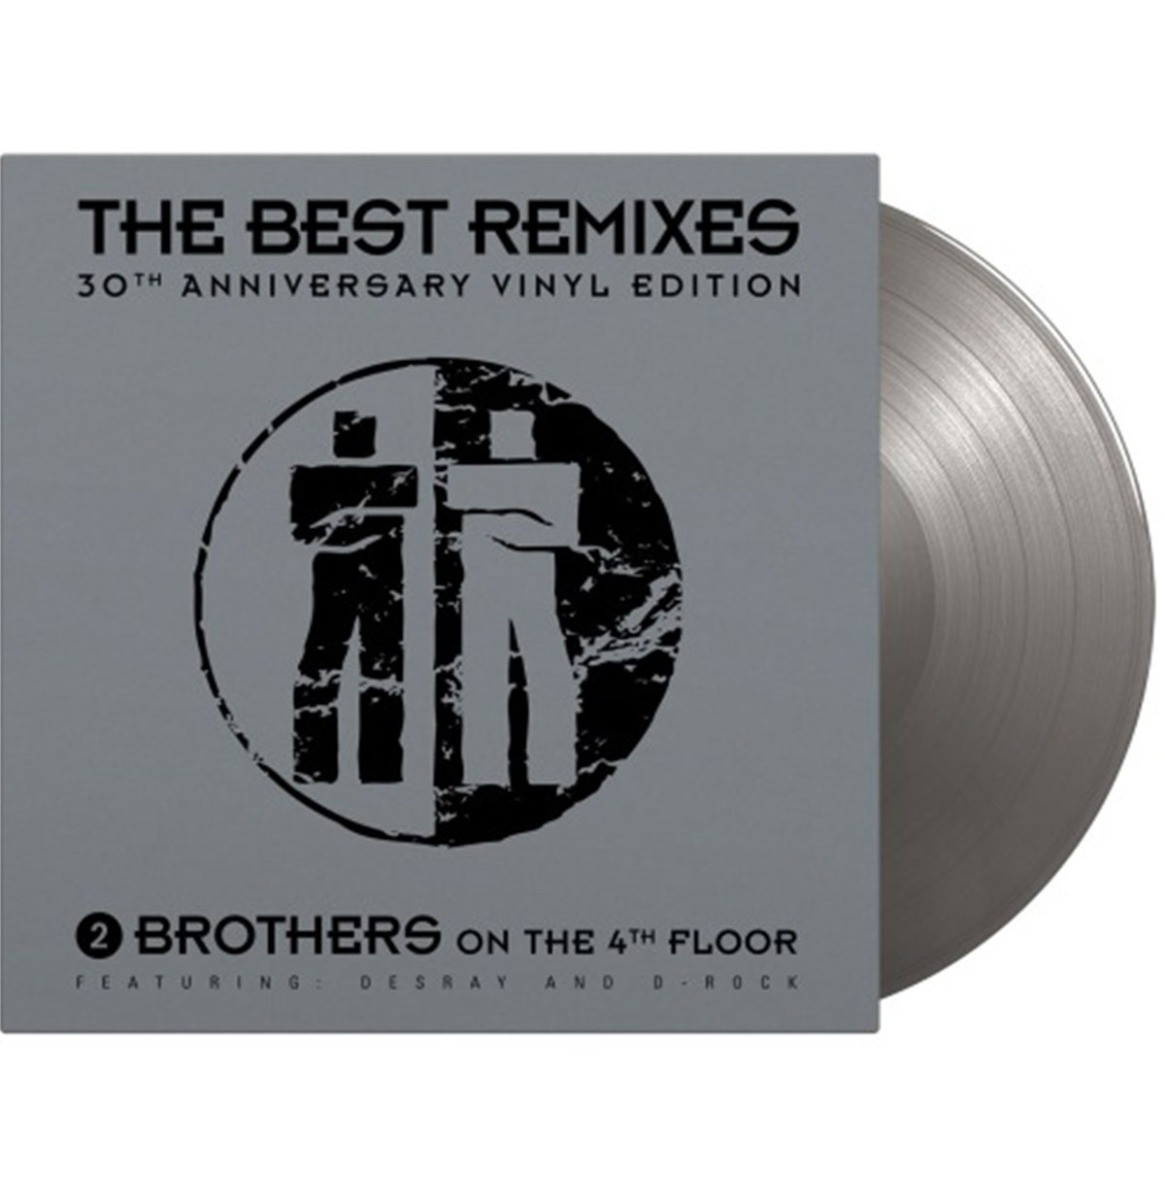 2 Brothers On The 4th Floor - The Best Remixes (30th Anniversary Vinyl Edition) (Gekleurd Vinyl) 2LP